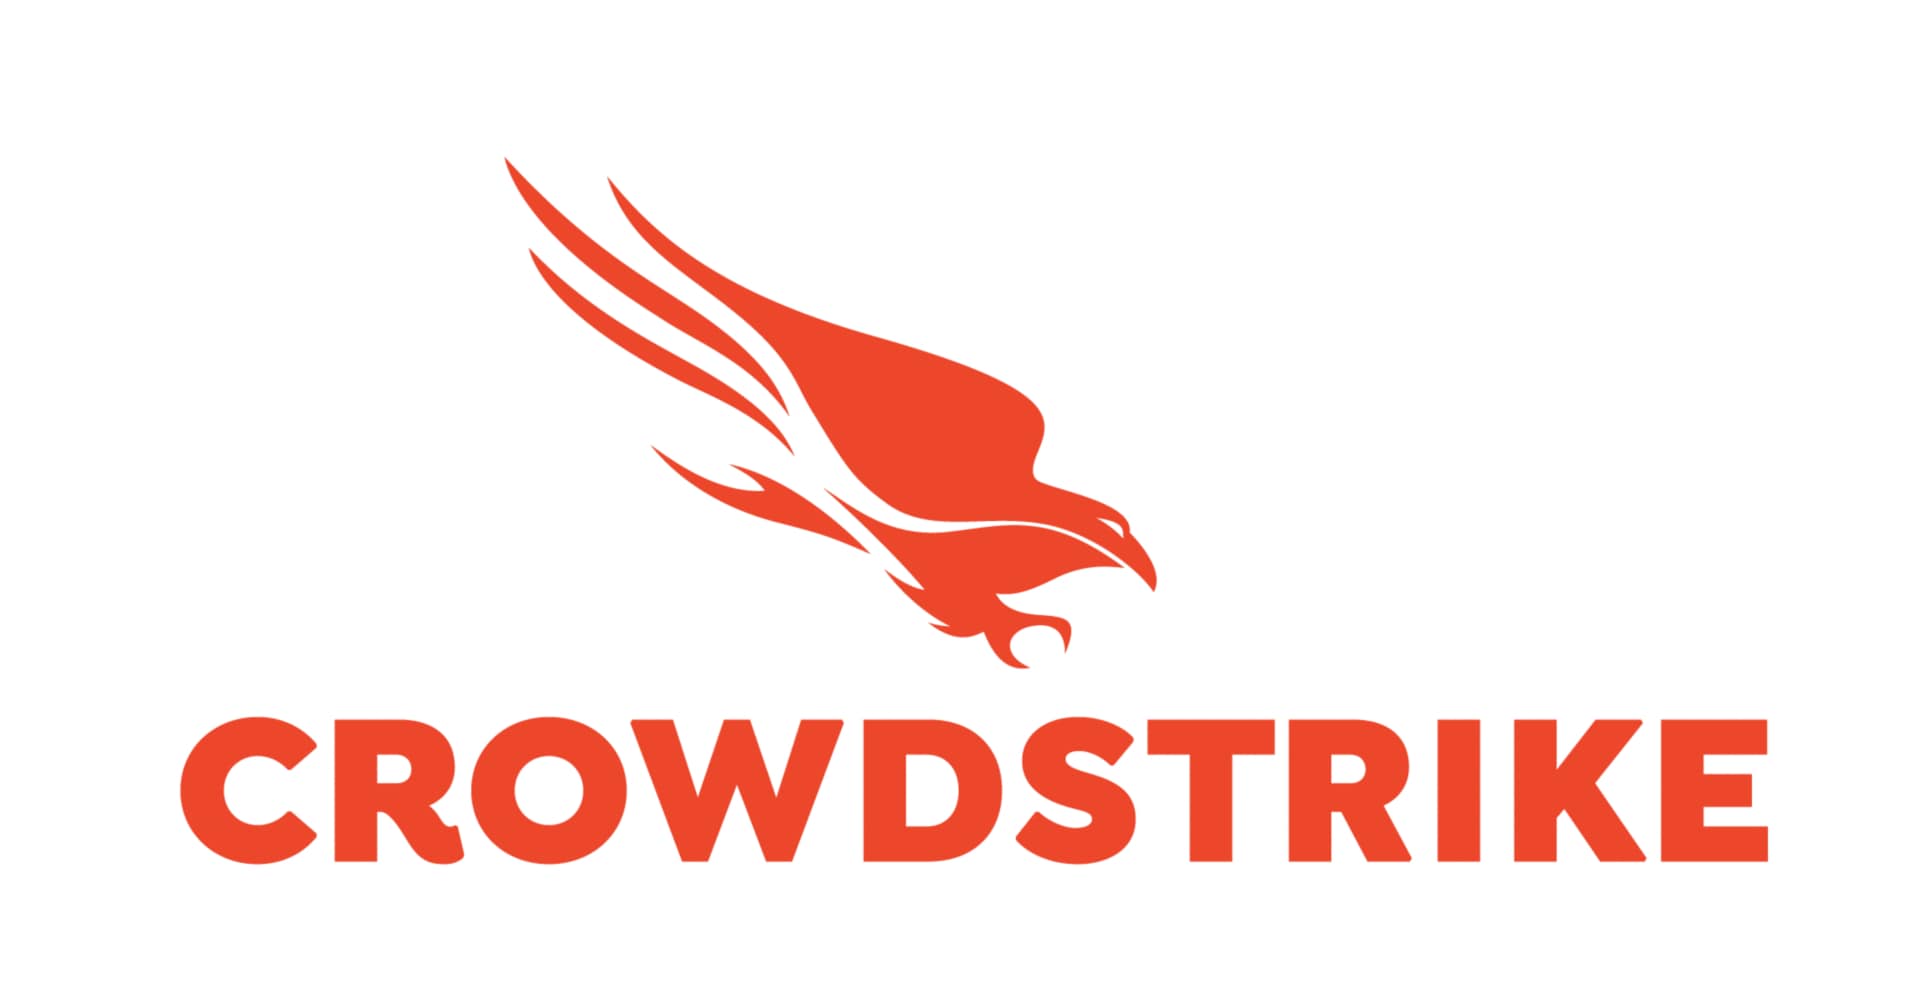 CrowdStrike 21-Month Falcon Firewall Management Bundle Promo Software